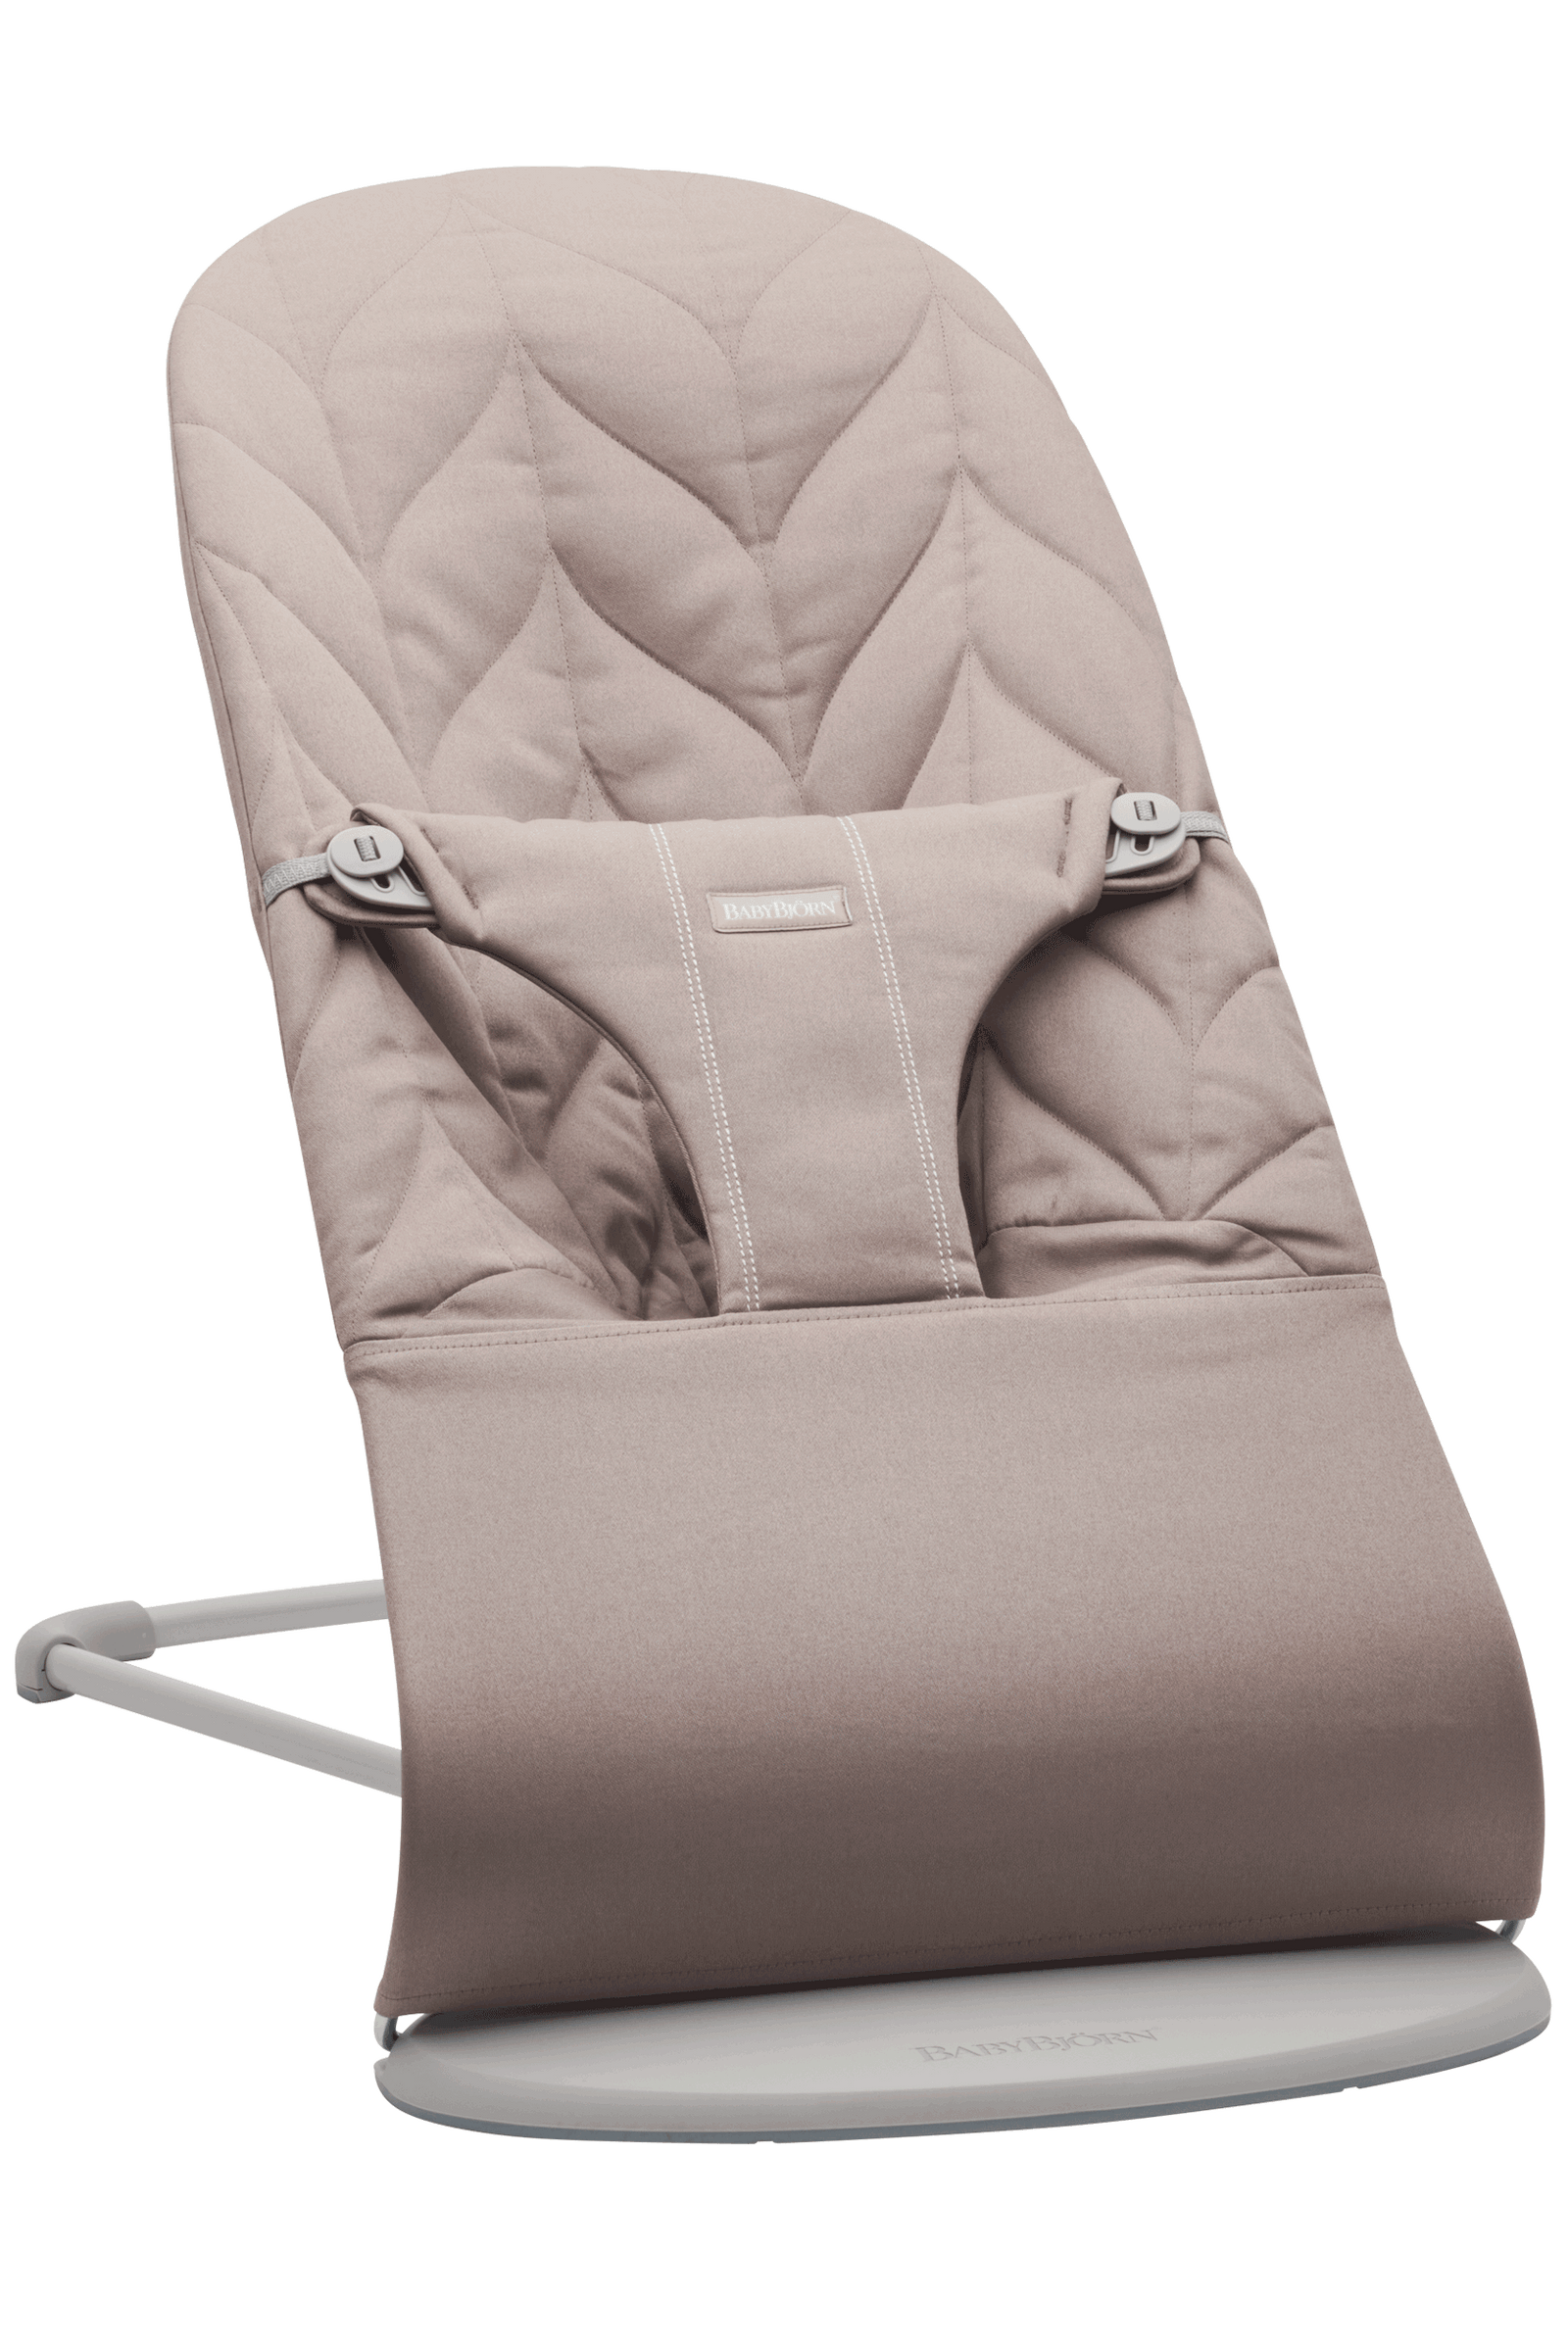 BabyBjörn Bliss 嬰兒搖椅 瑞典製造-Quilted Cotton-Sand Grey-Suchprice® 優價網